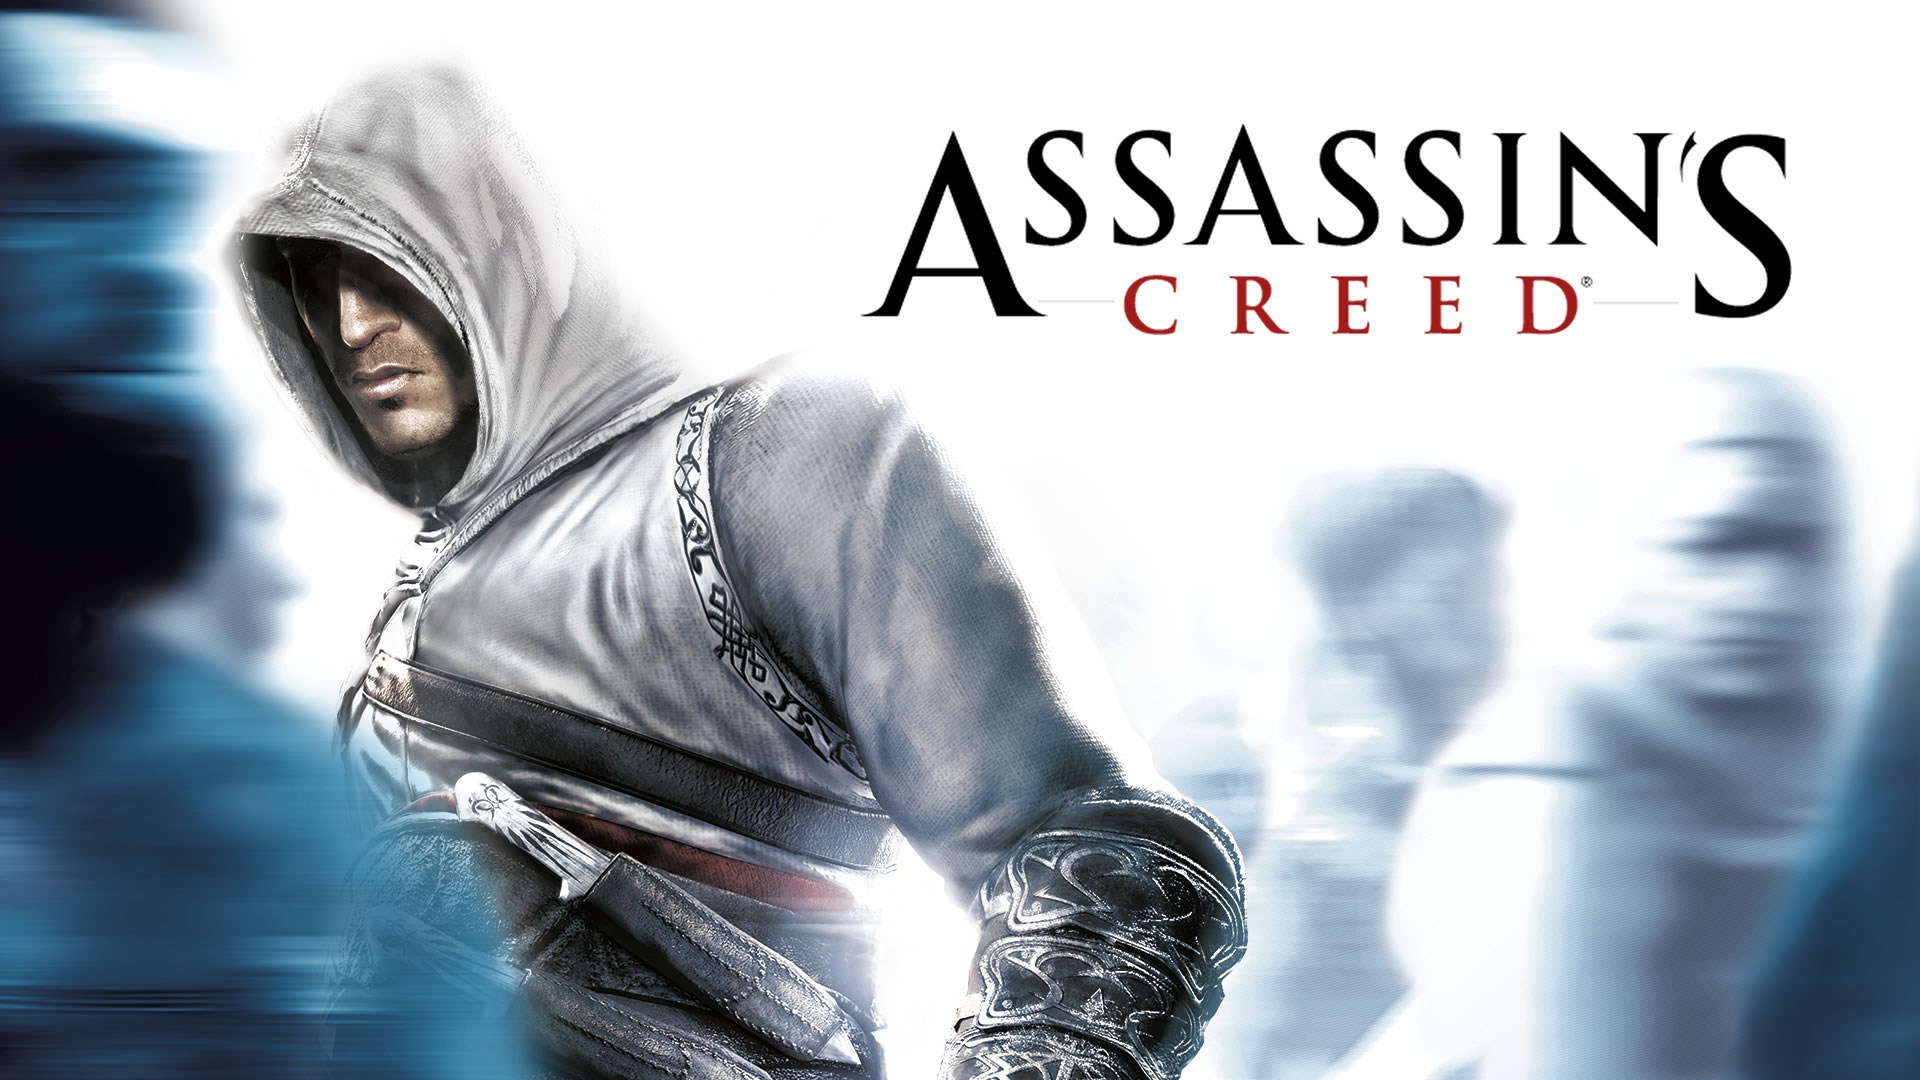 1 Assassins Creed اسانس كريد 1